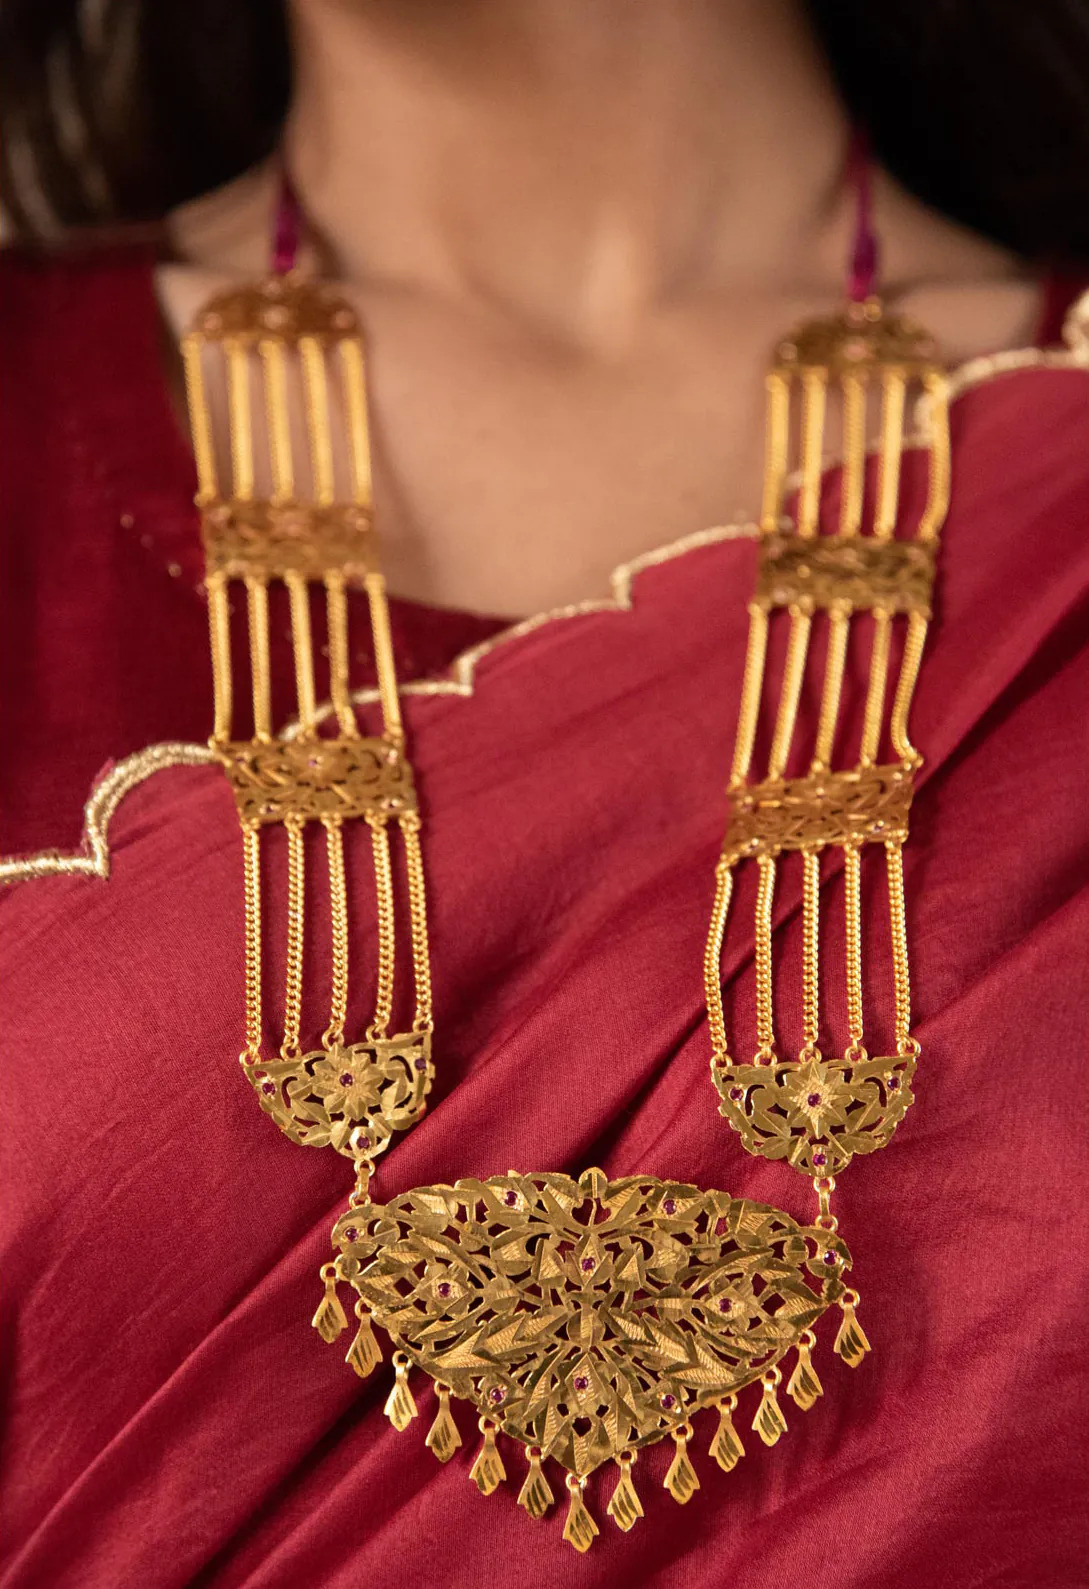 Rani Haar Jewellery: A History of Elegance and Prestige